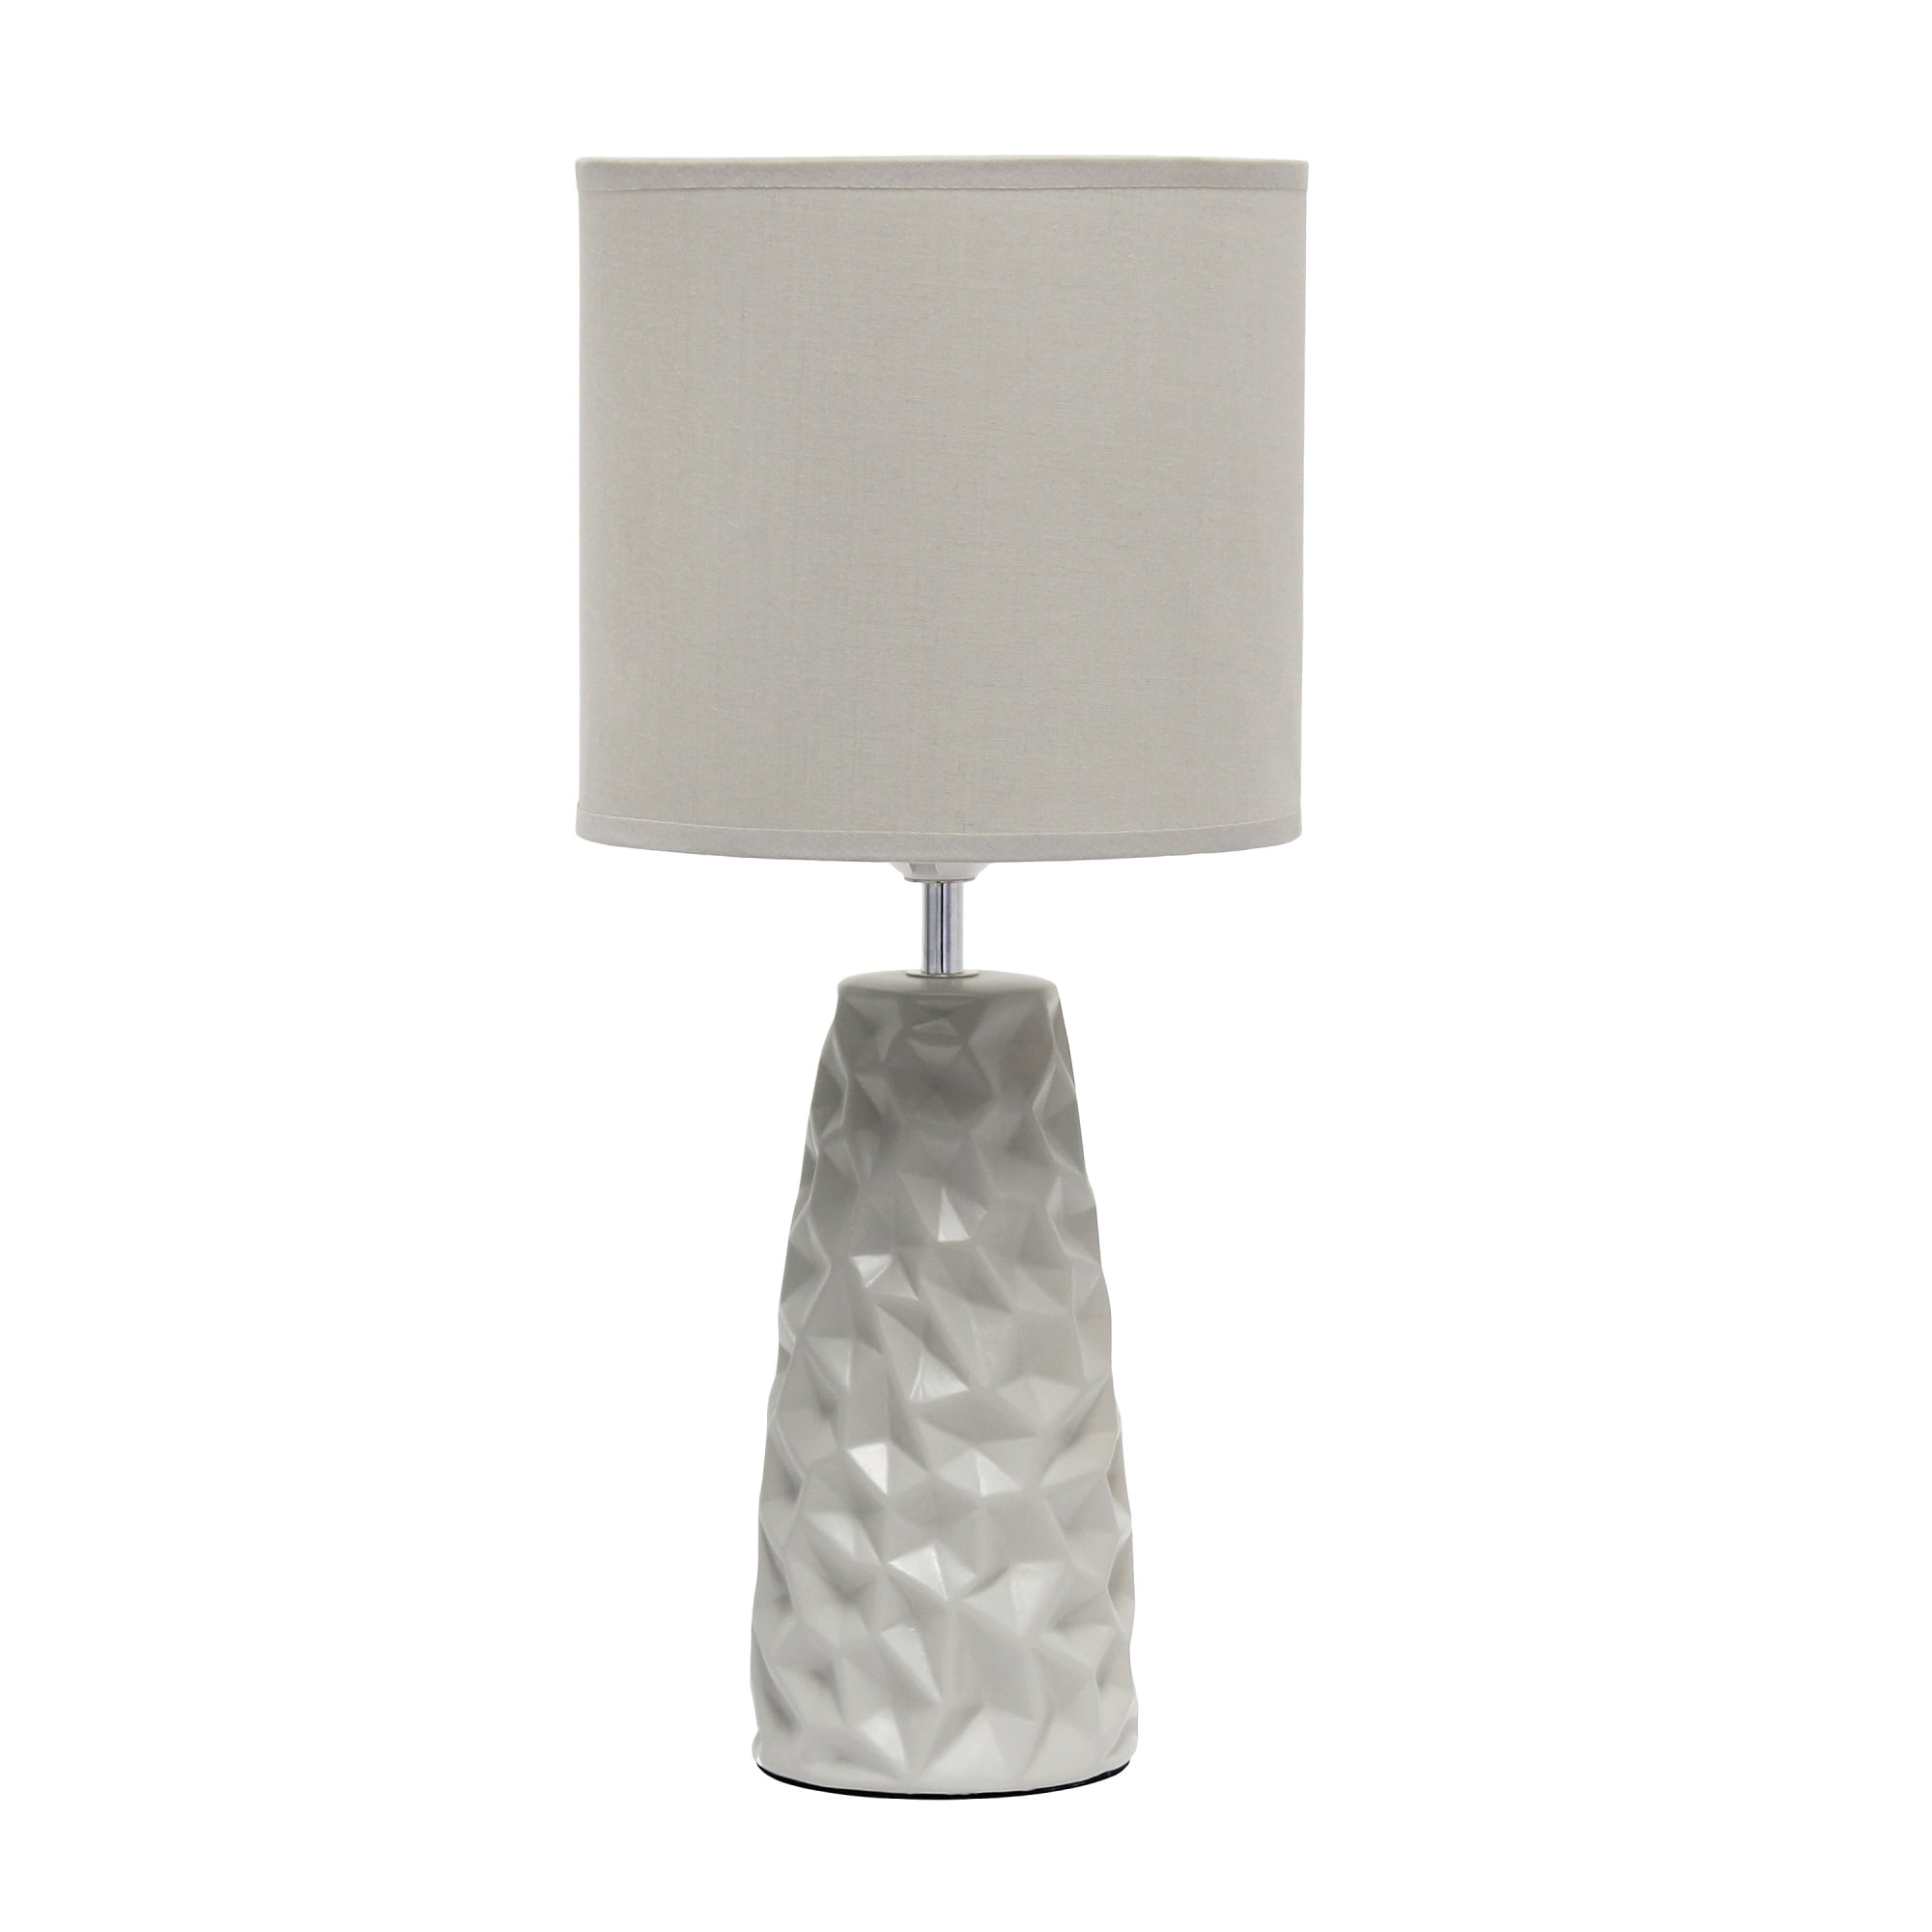 Simple Designs Sculpted Ceramic Table Lamp, Gray